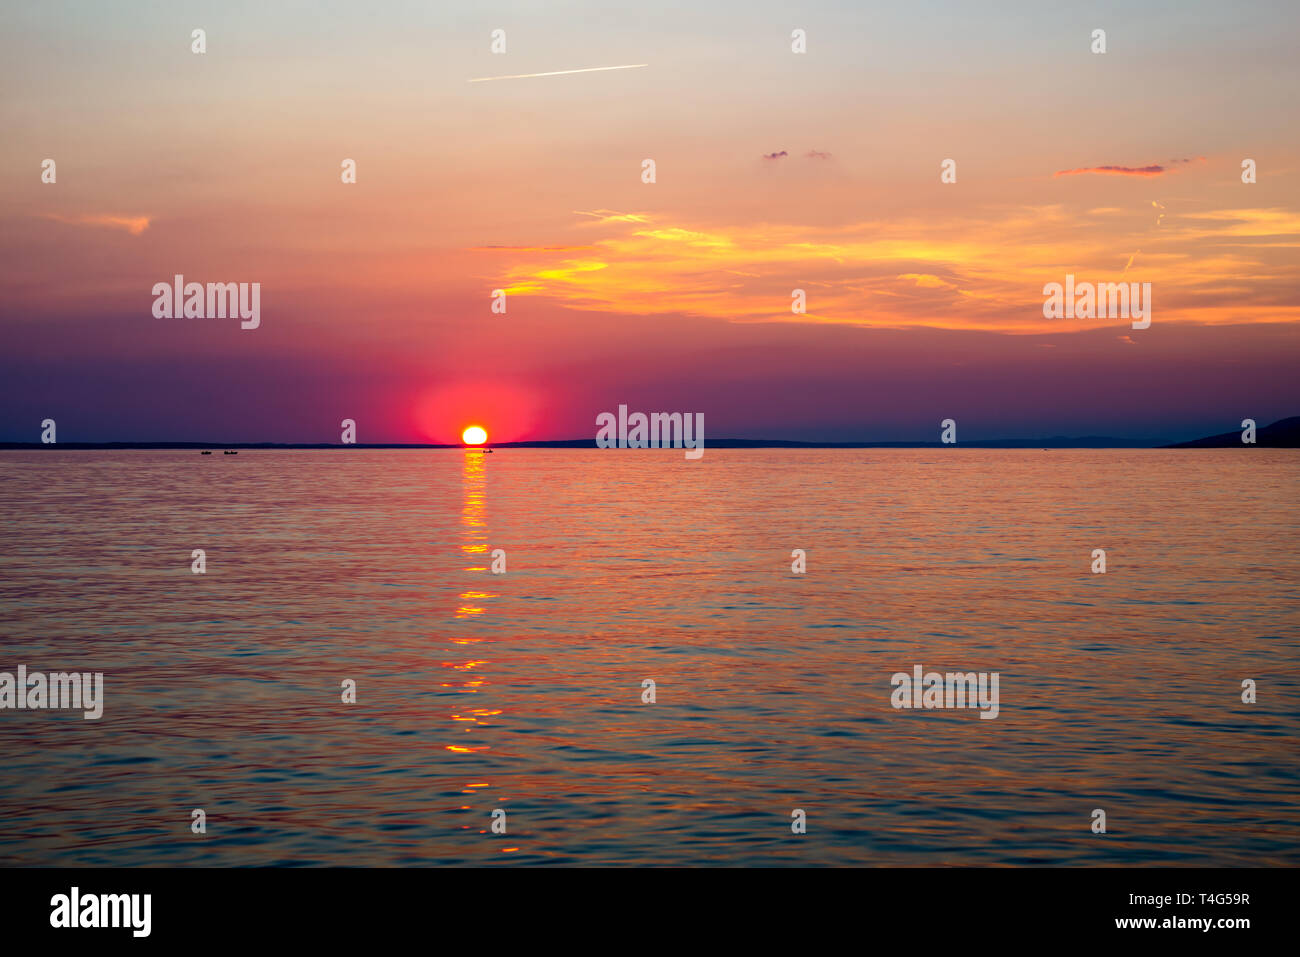 Sunset over Adriatic Sea with colourful dramatic sky near Starigrad in Dalmatia, Croatia. Stock Photo